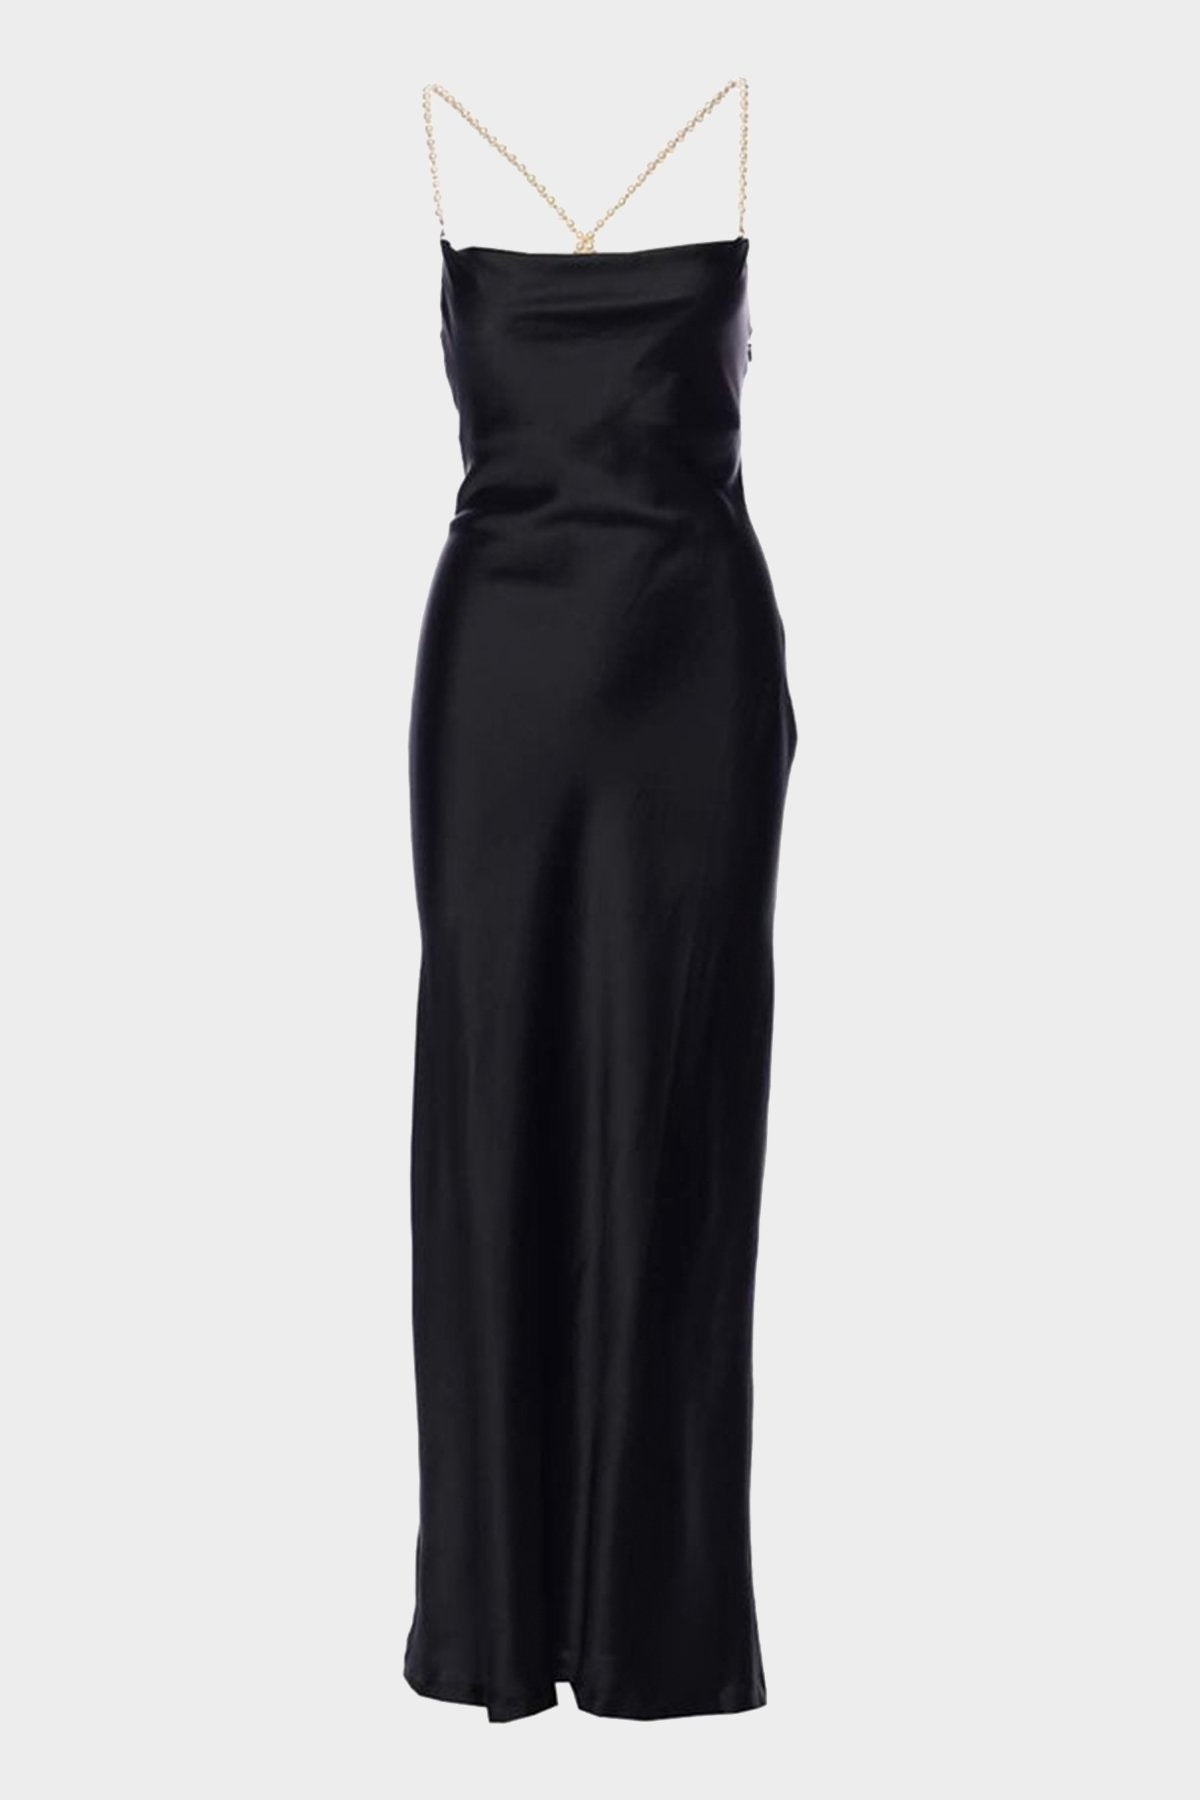 Electra Dress in Black - shop-olivia.com